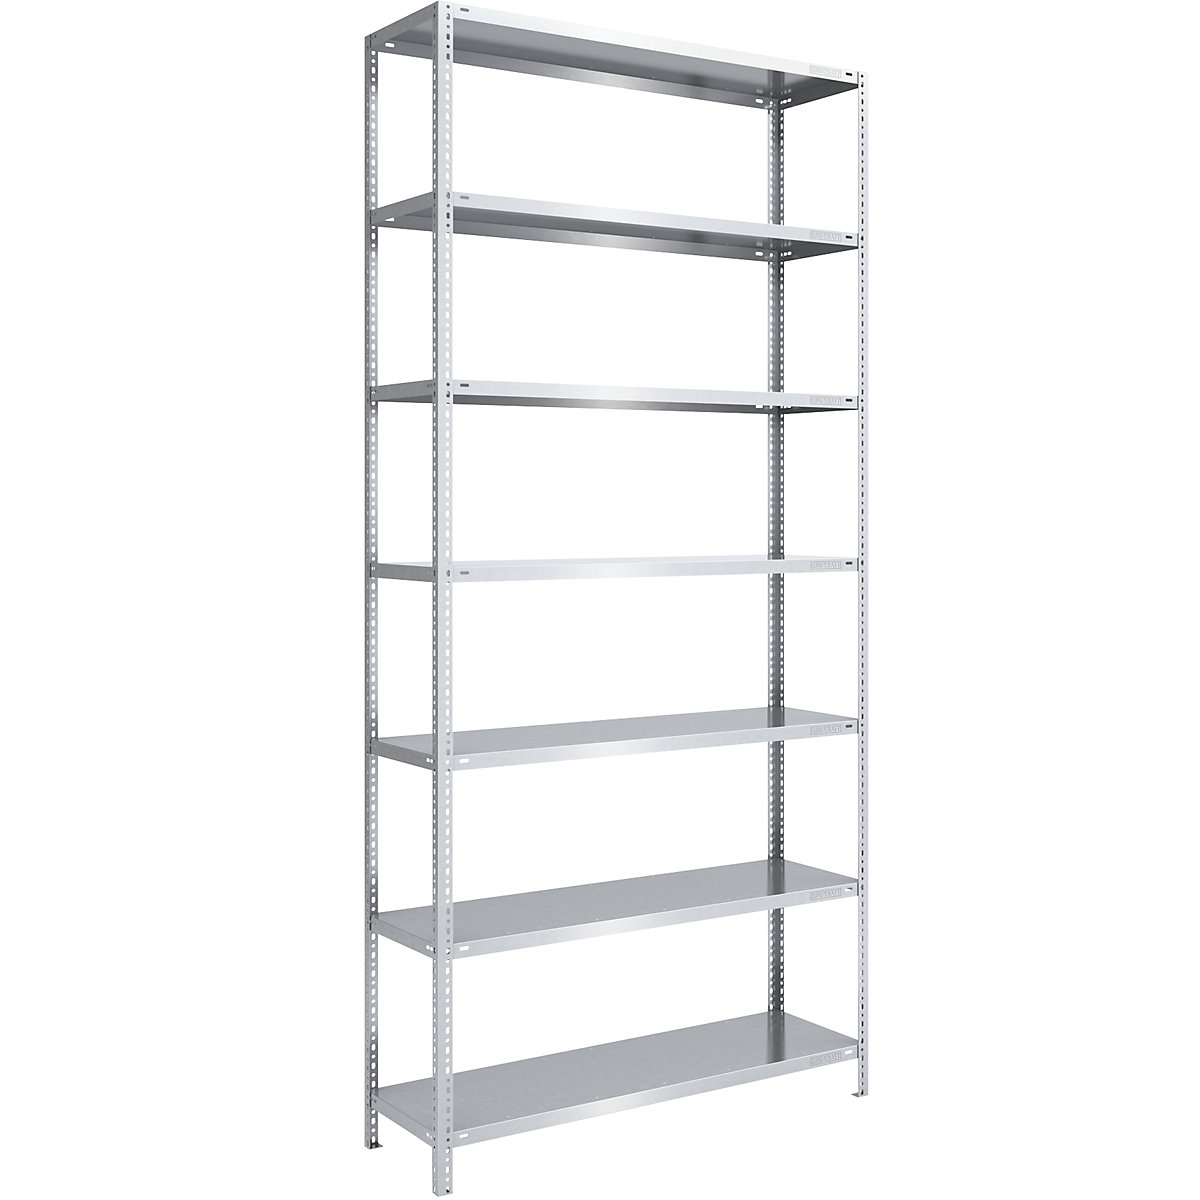 Bolt-together shelf unit, light duty, zinc plated – eurokraft pro, shelf unit height 3000 mm, shelf width 1300 mm, depth 500 mm, standard shelf unit-5